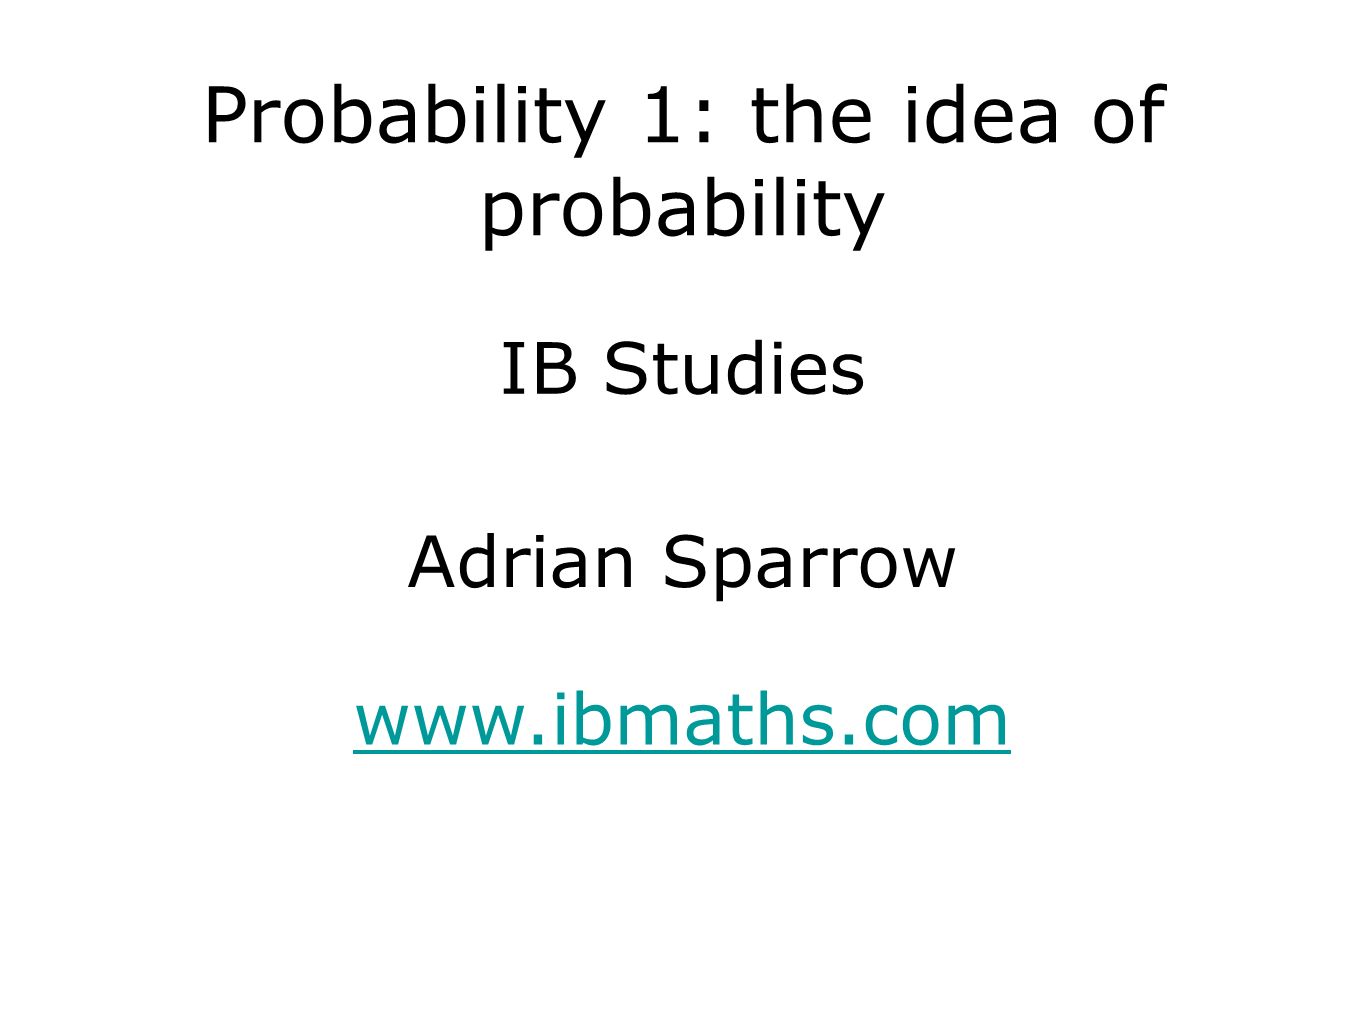 Probability studies